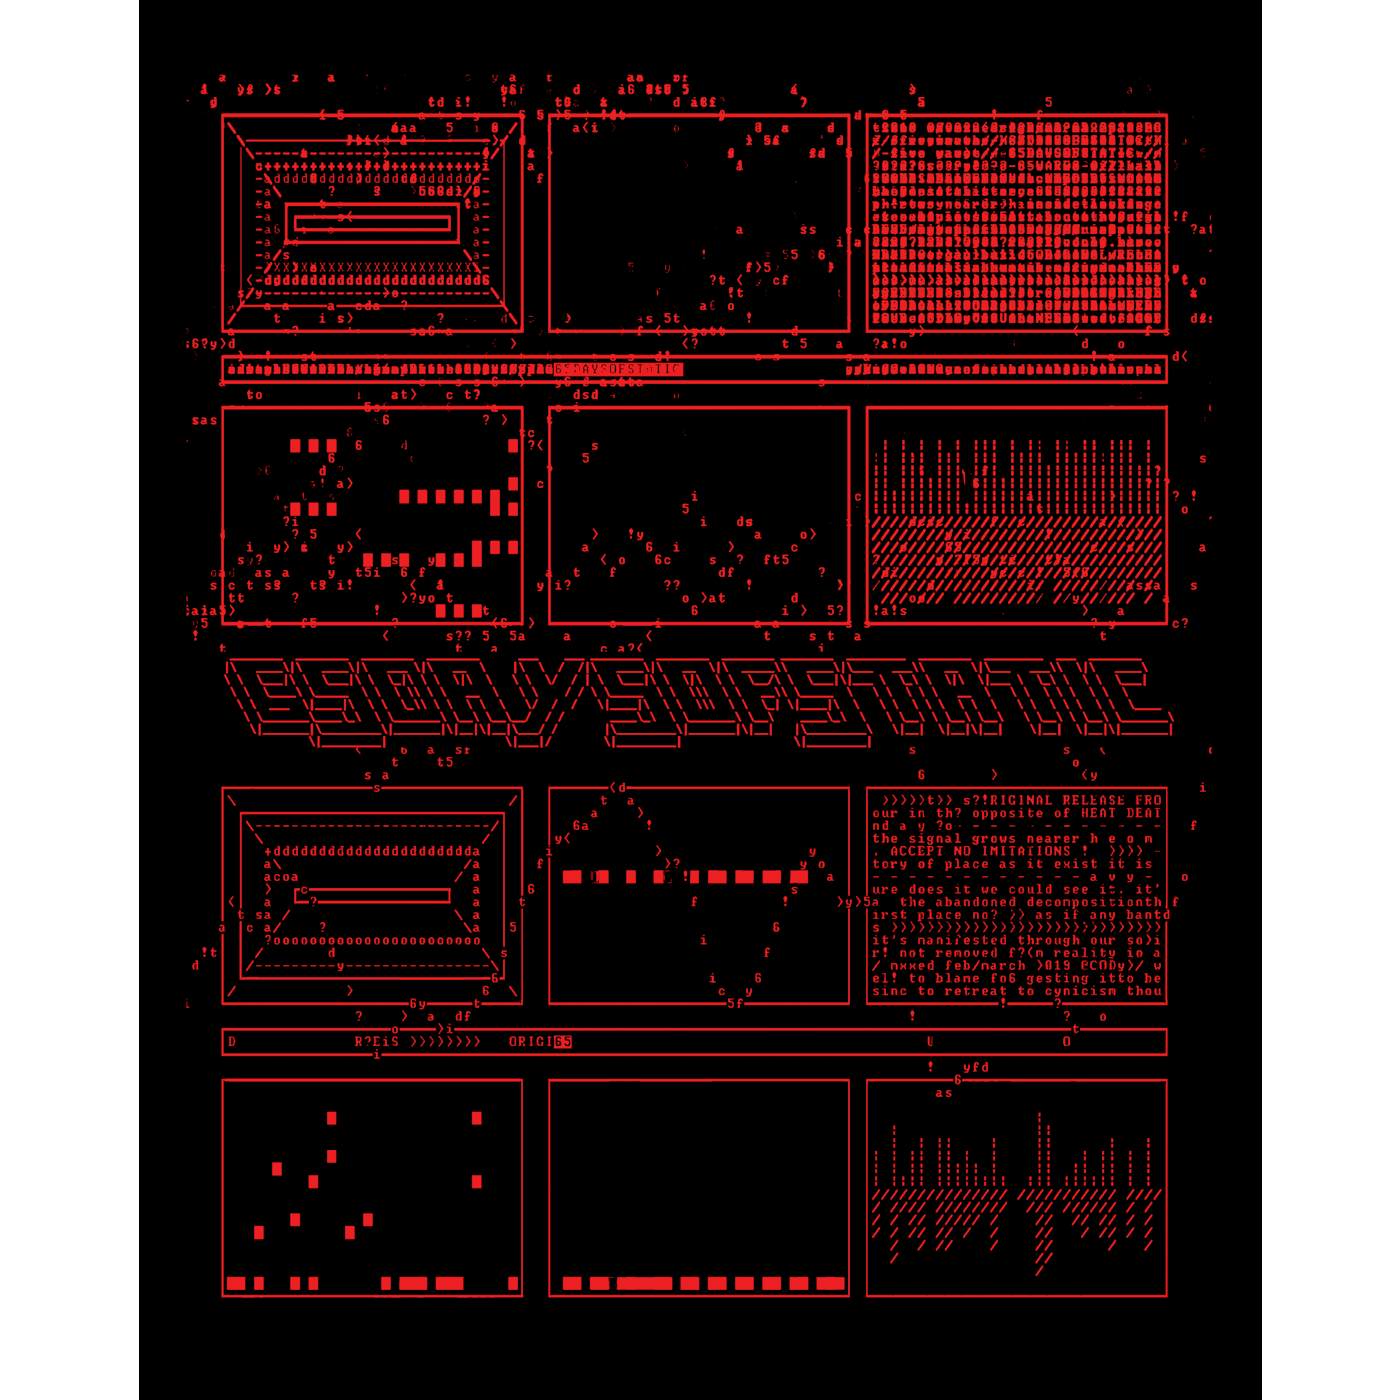 65daysofstatic ASCII RED BLACK T-SHIRT